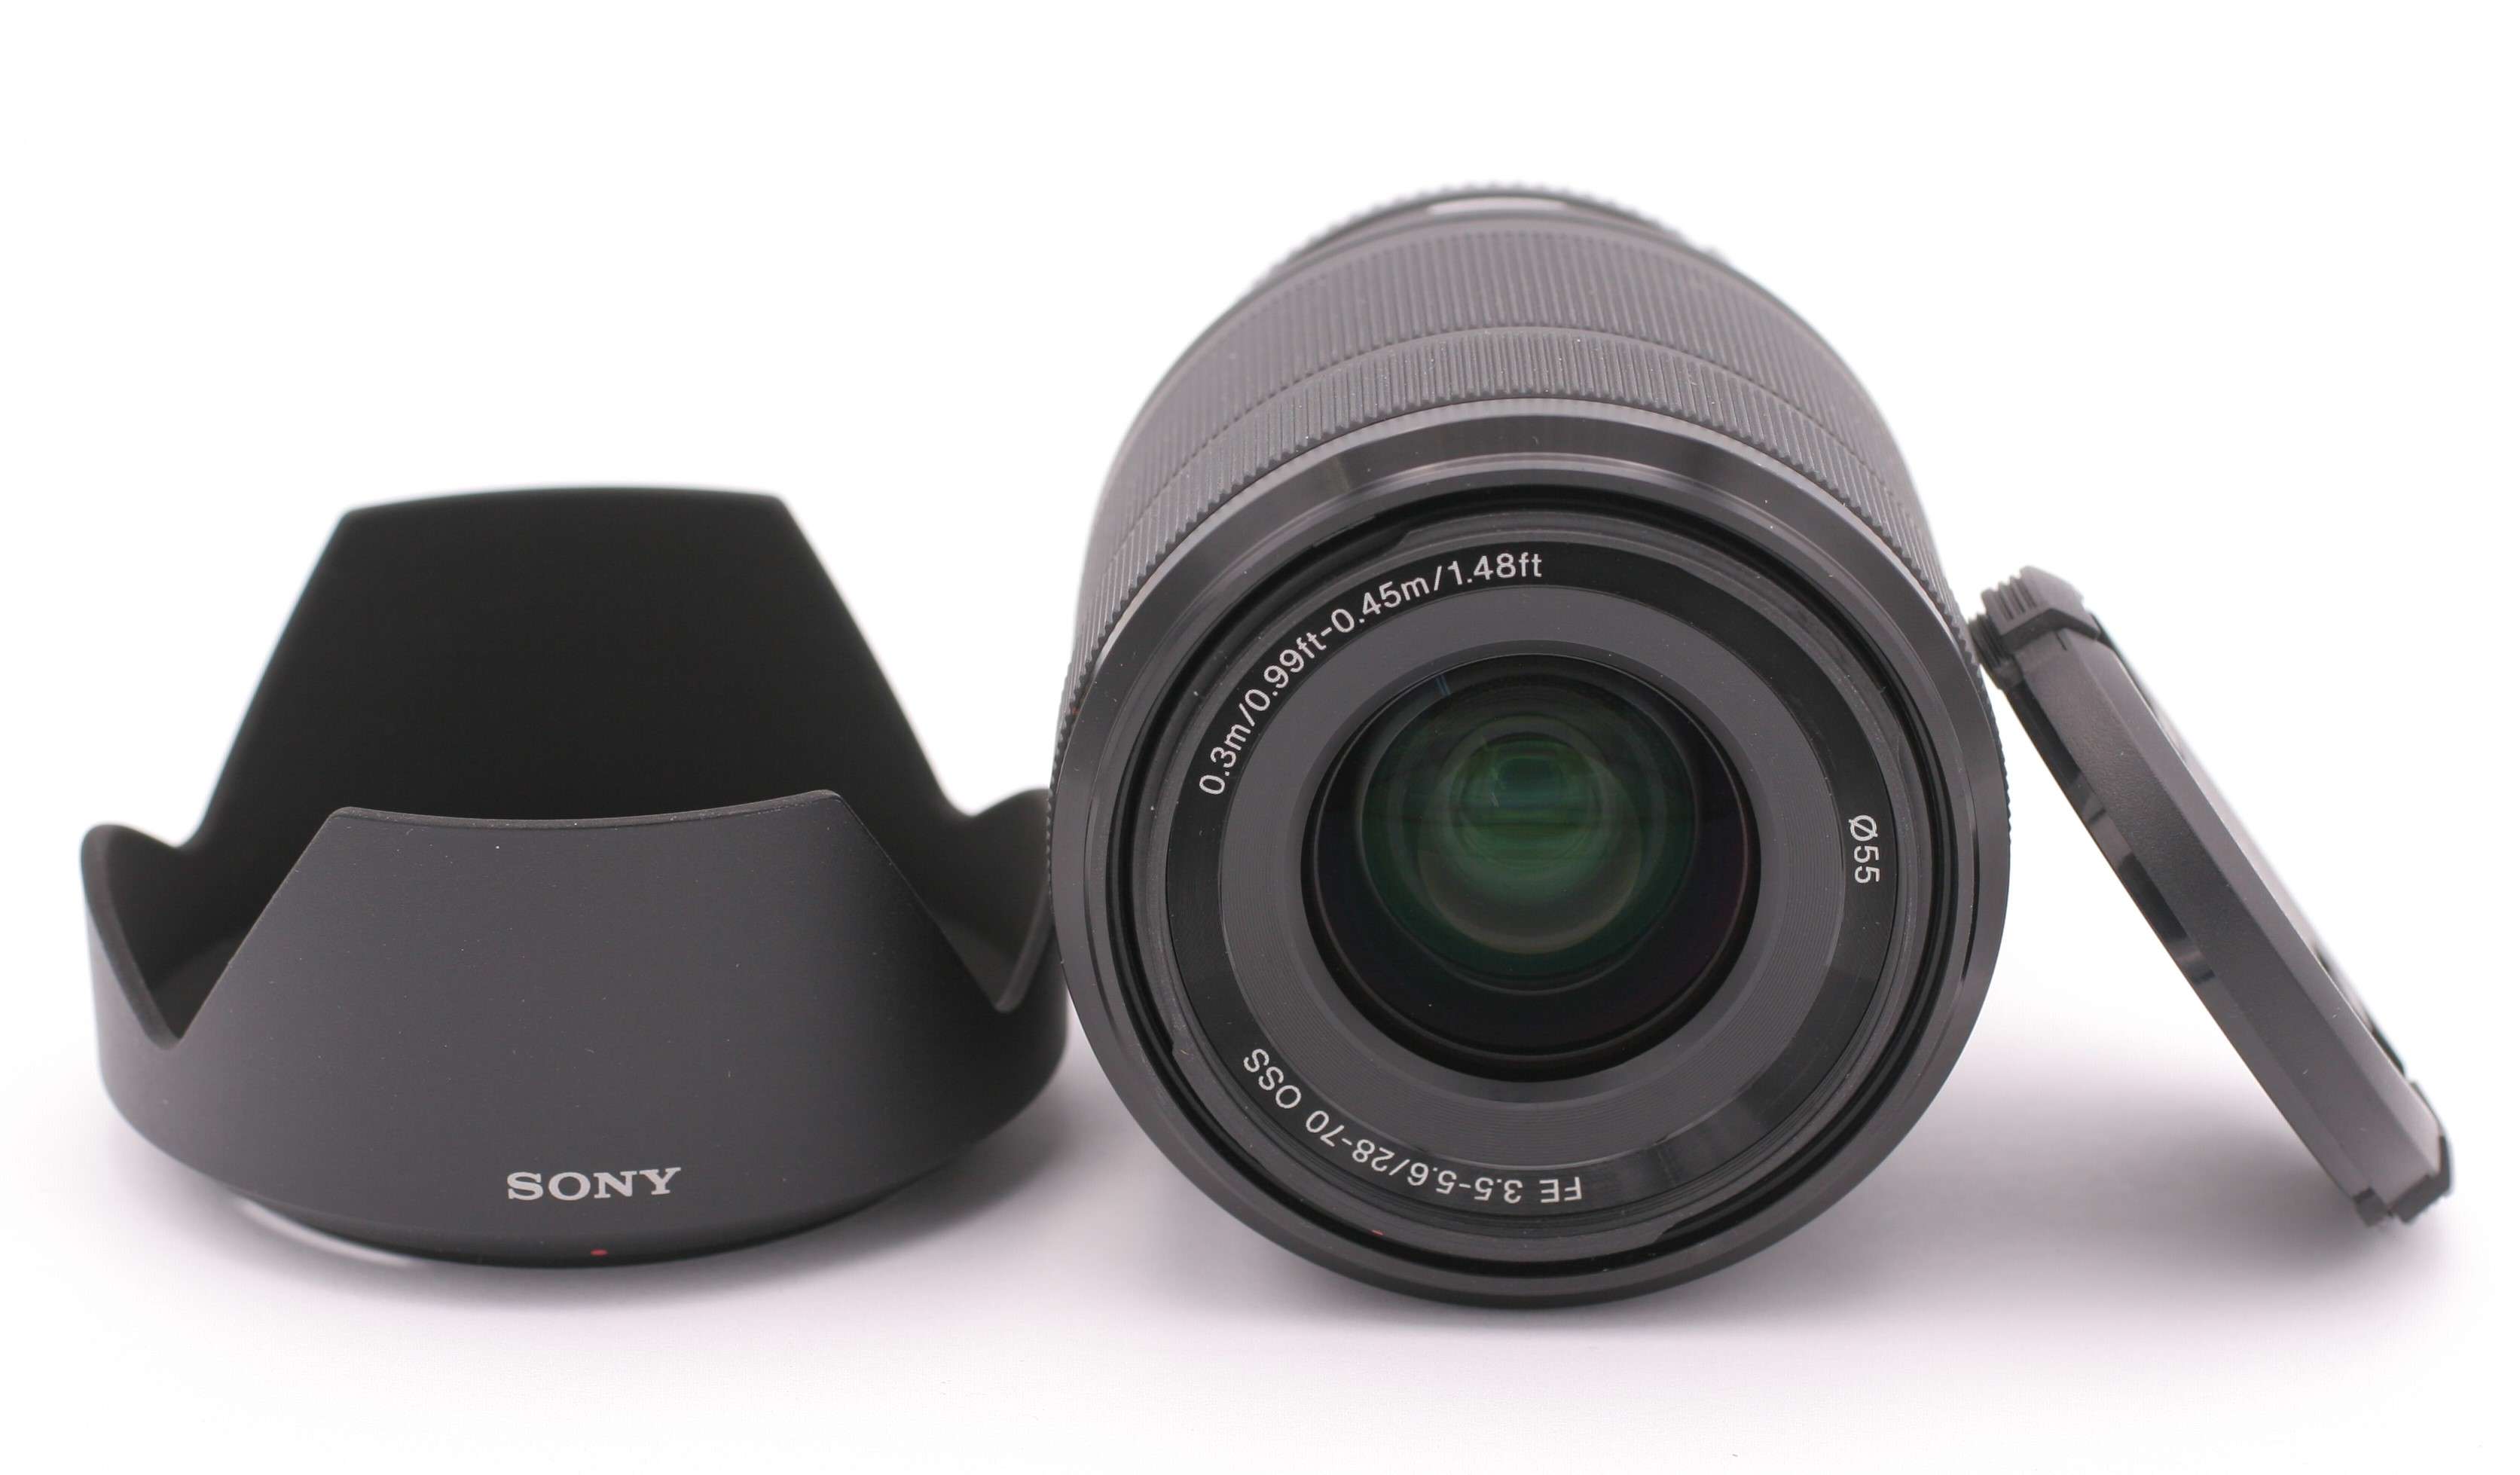 Sony SEL2870 FE 28-70mm F3.5-5.6 OSS Zoom Lens for Sony Alpha Cameras